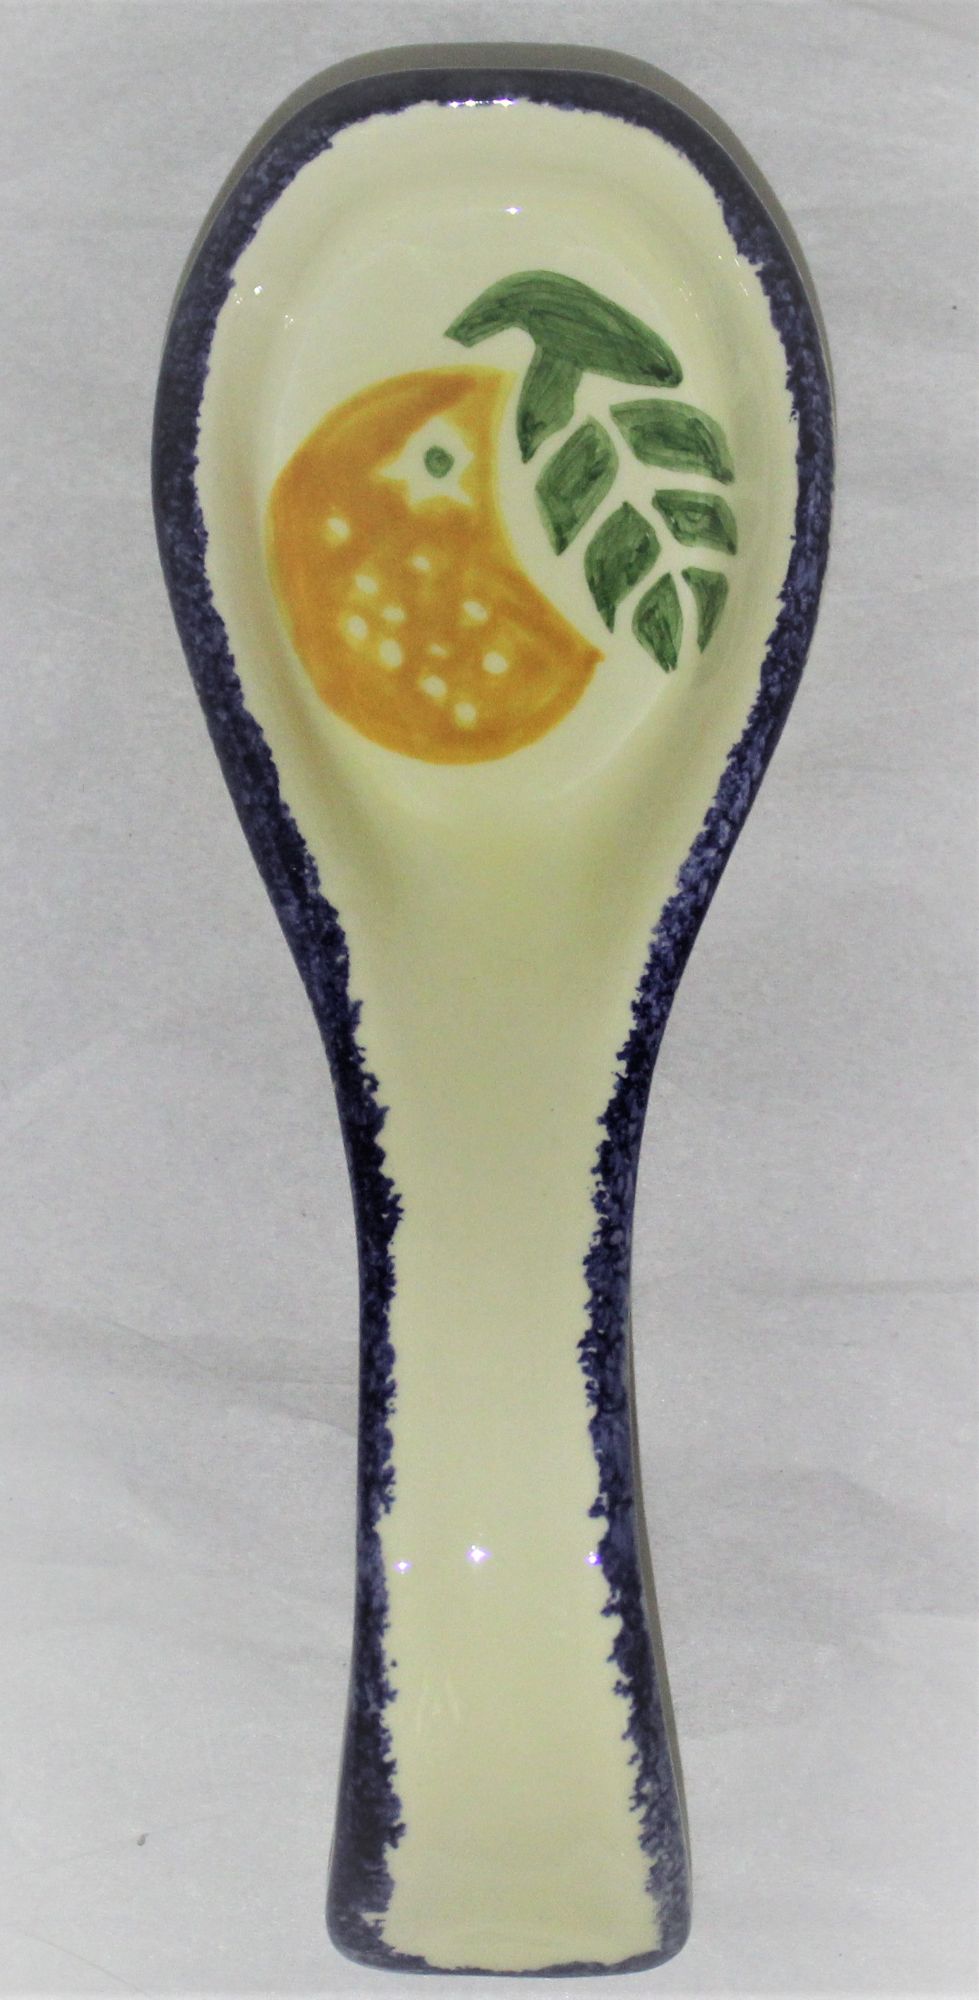 Small Spoon Rest - Studio Poole Dorset Fruits design - Orange